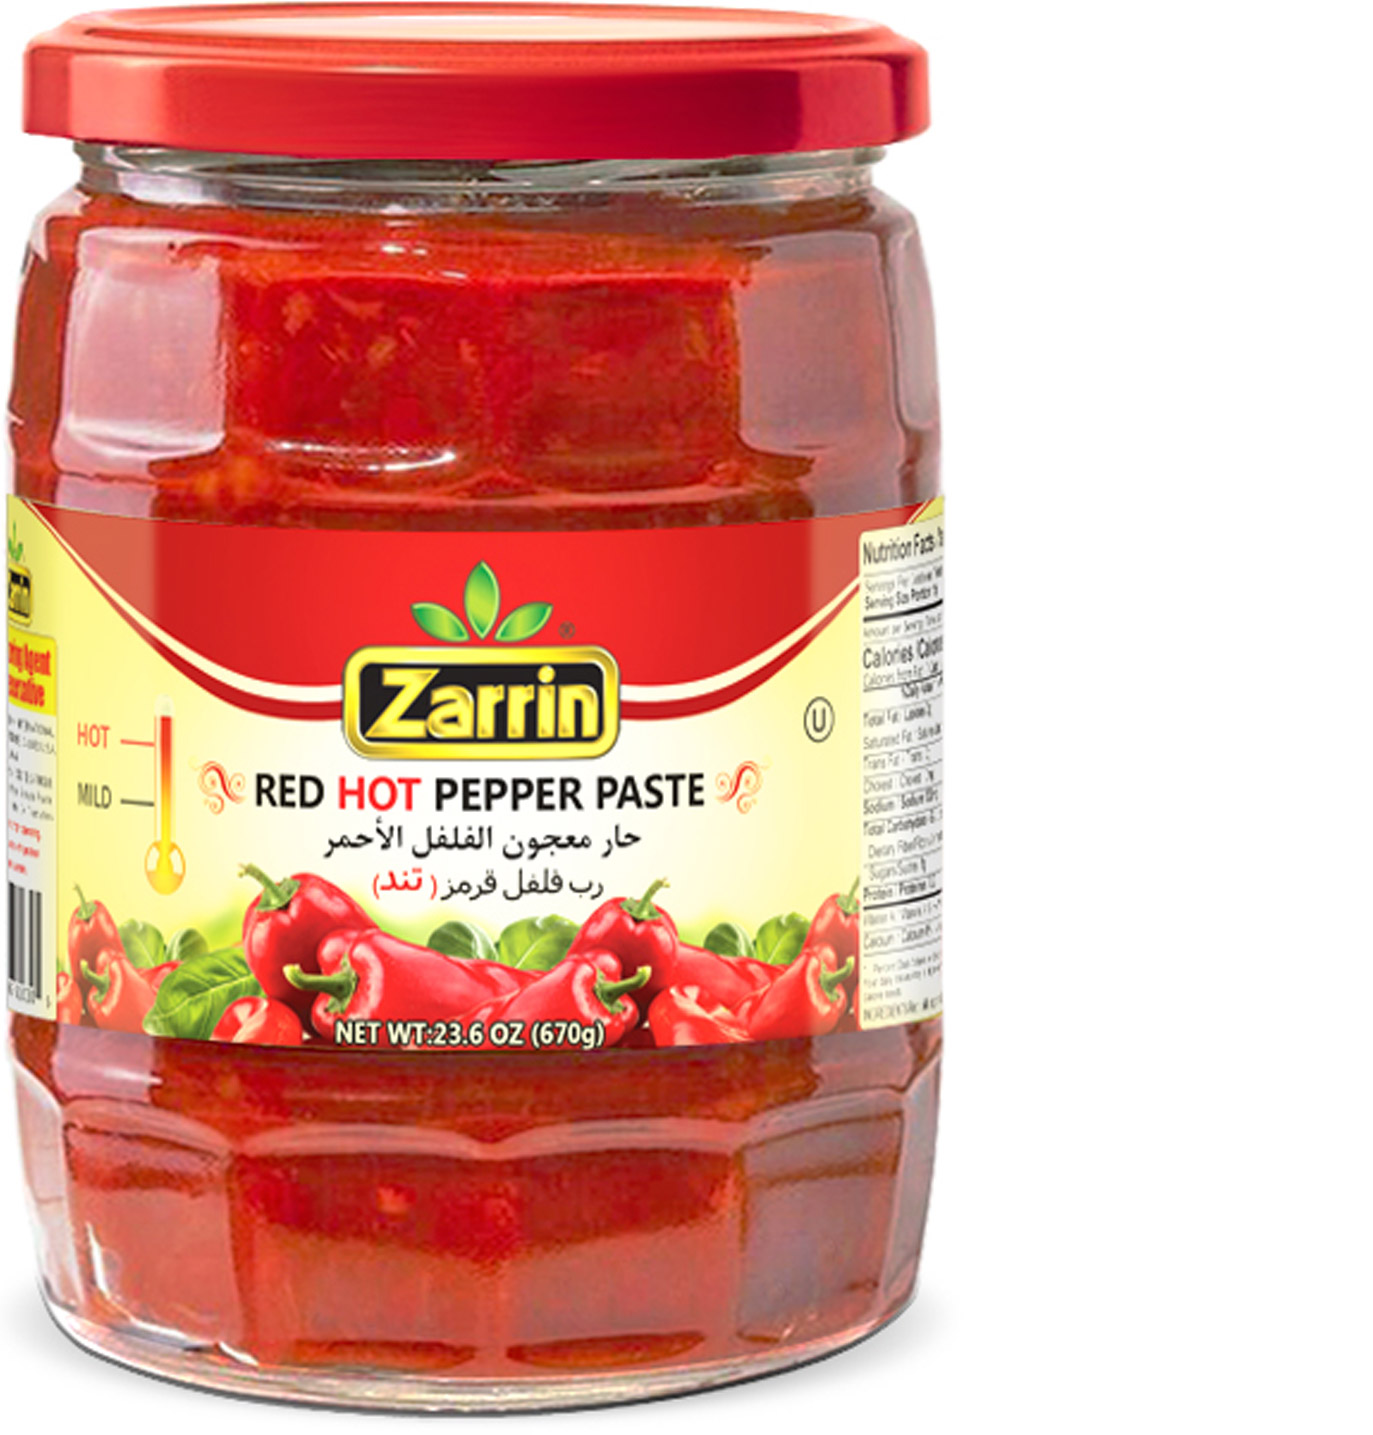 Zarrin hot pepper paste in 23.6 oz glass jar.